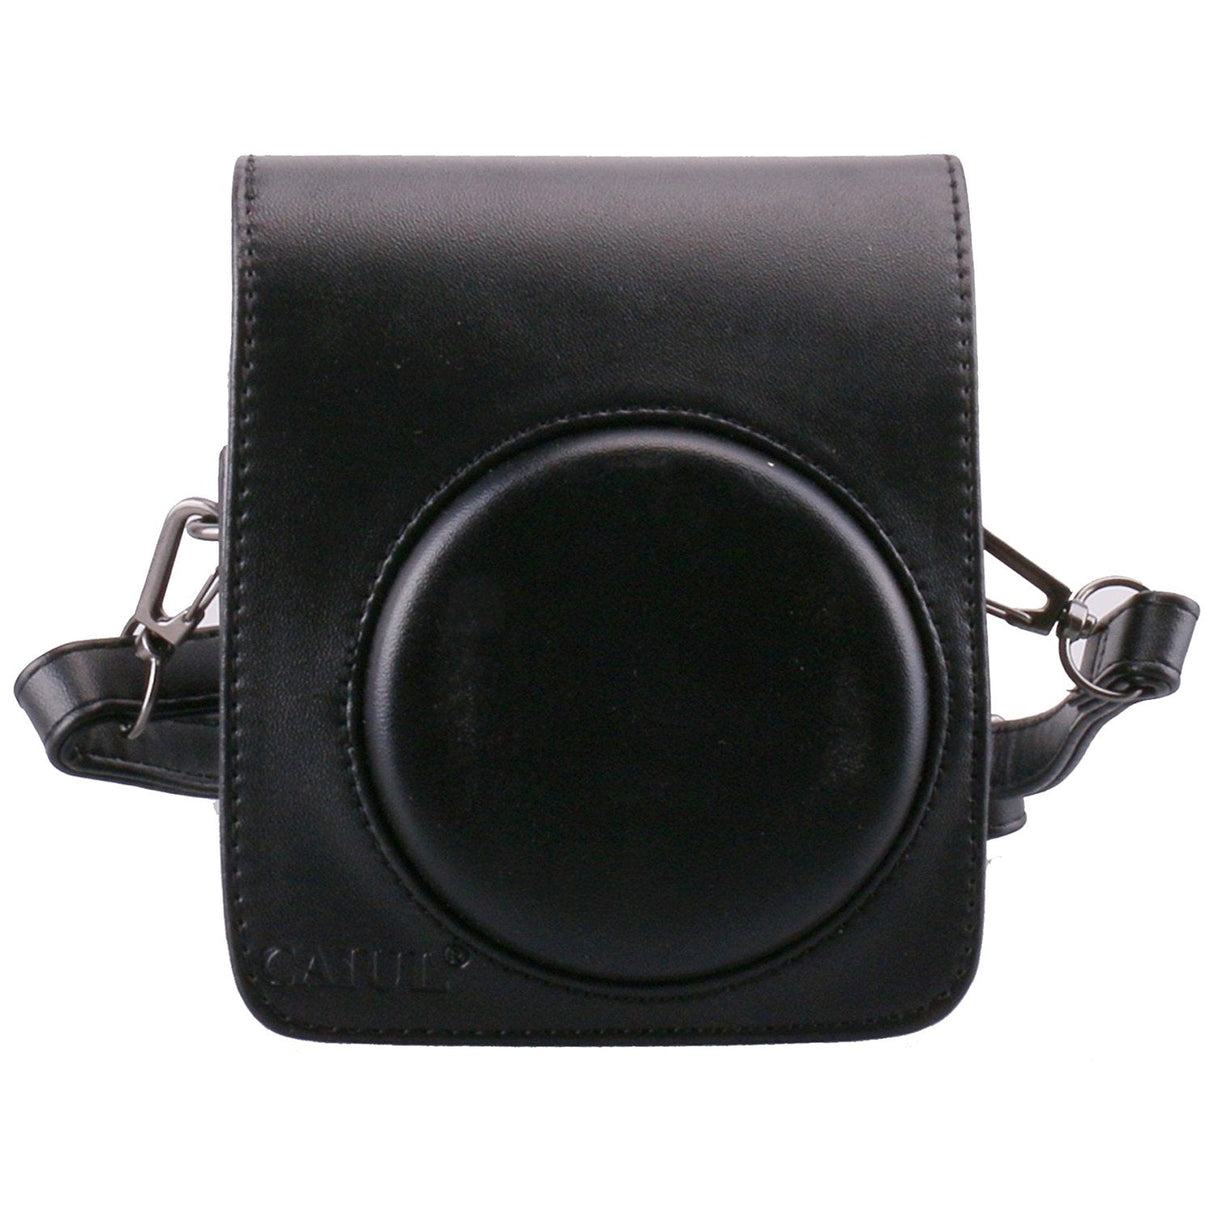 [Fujifilm Instax Mini 70 Case]  CAIUL Comprehensive Protection Instax Mini 70 Camera Case Bag With Soft PU Leather Material ( black )